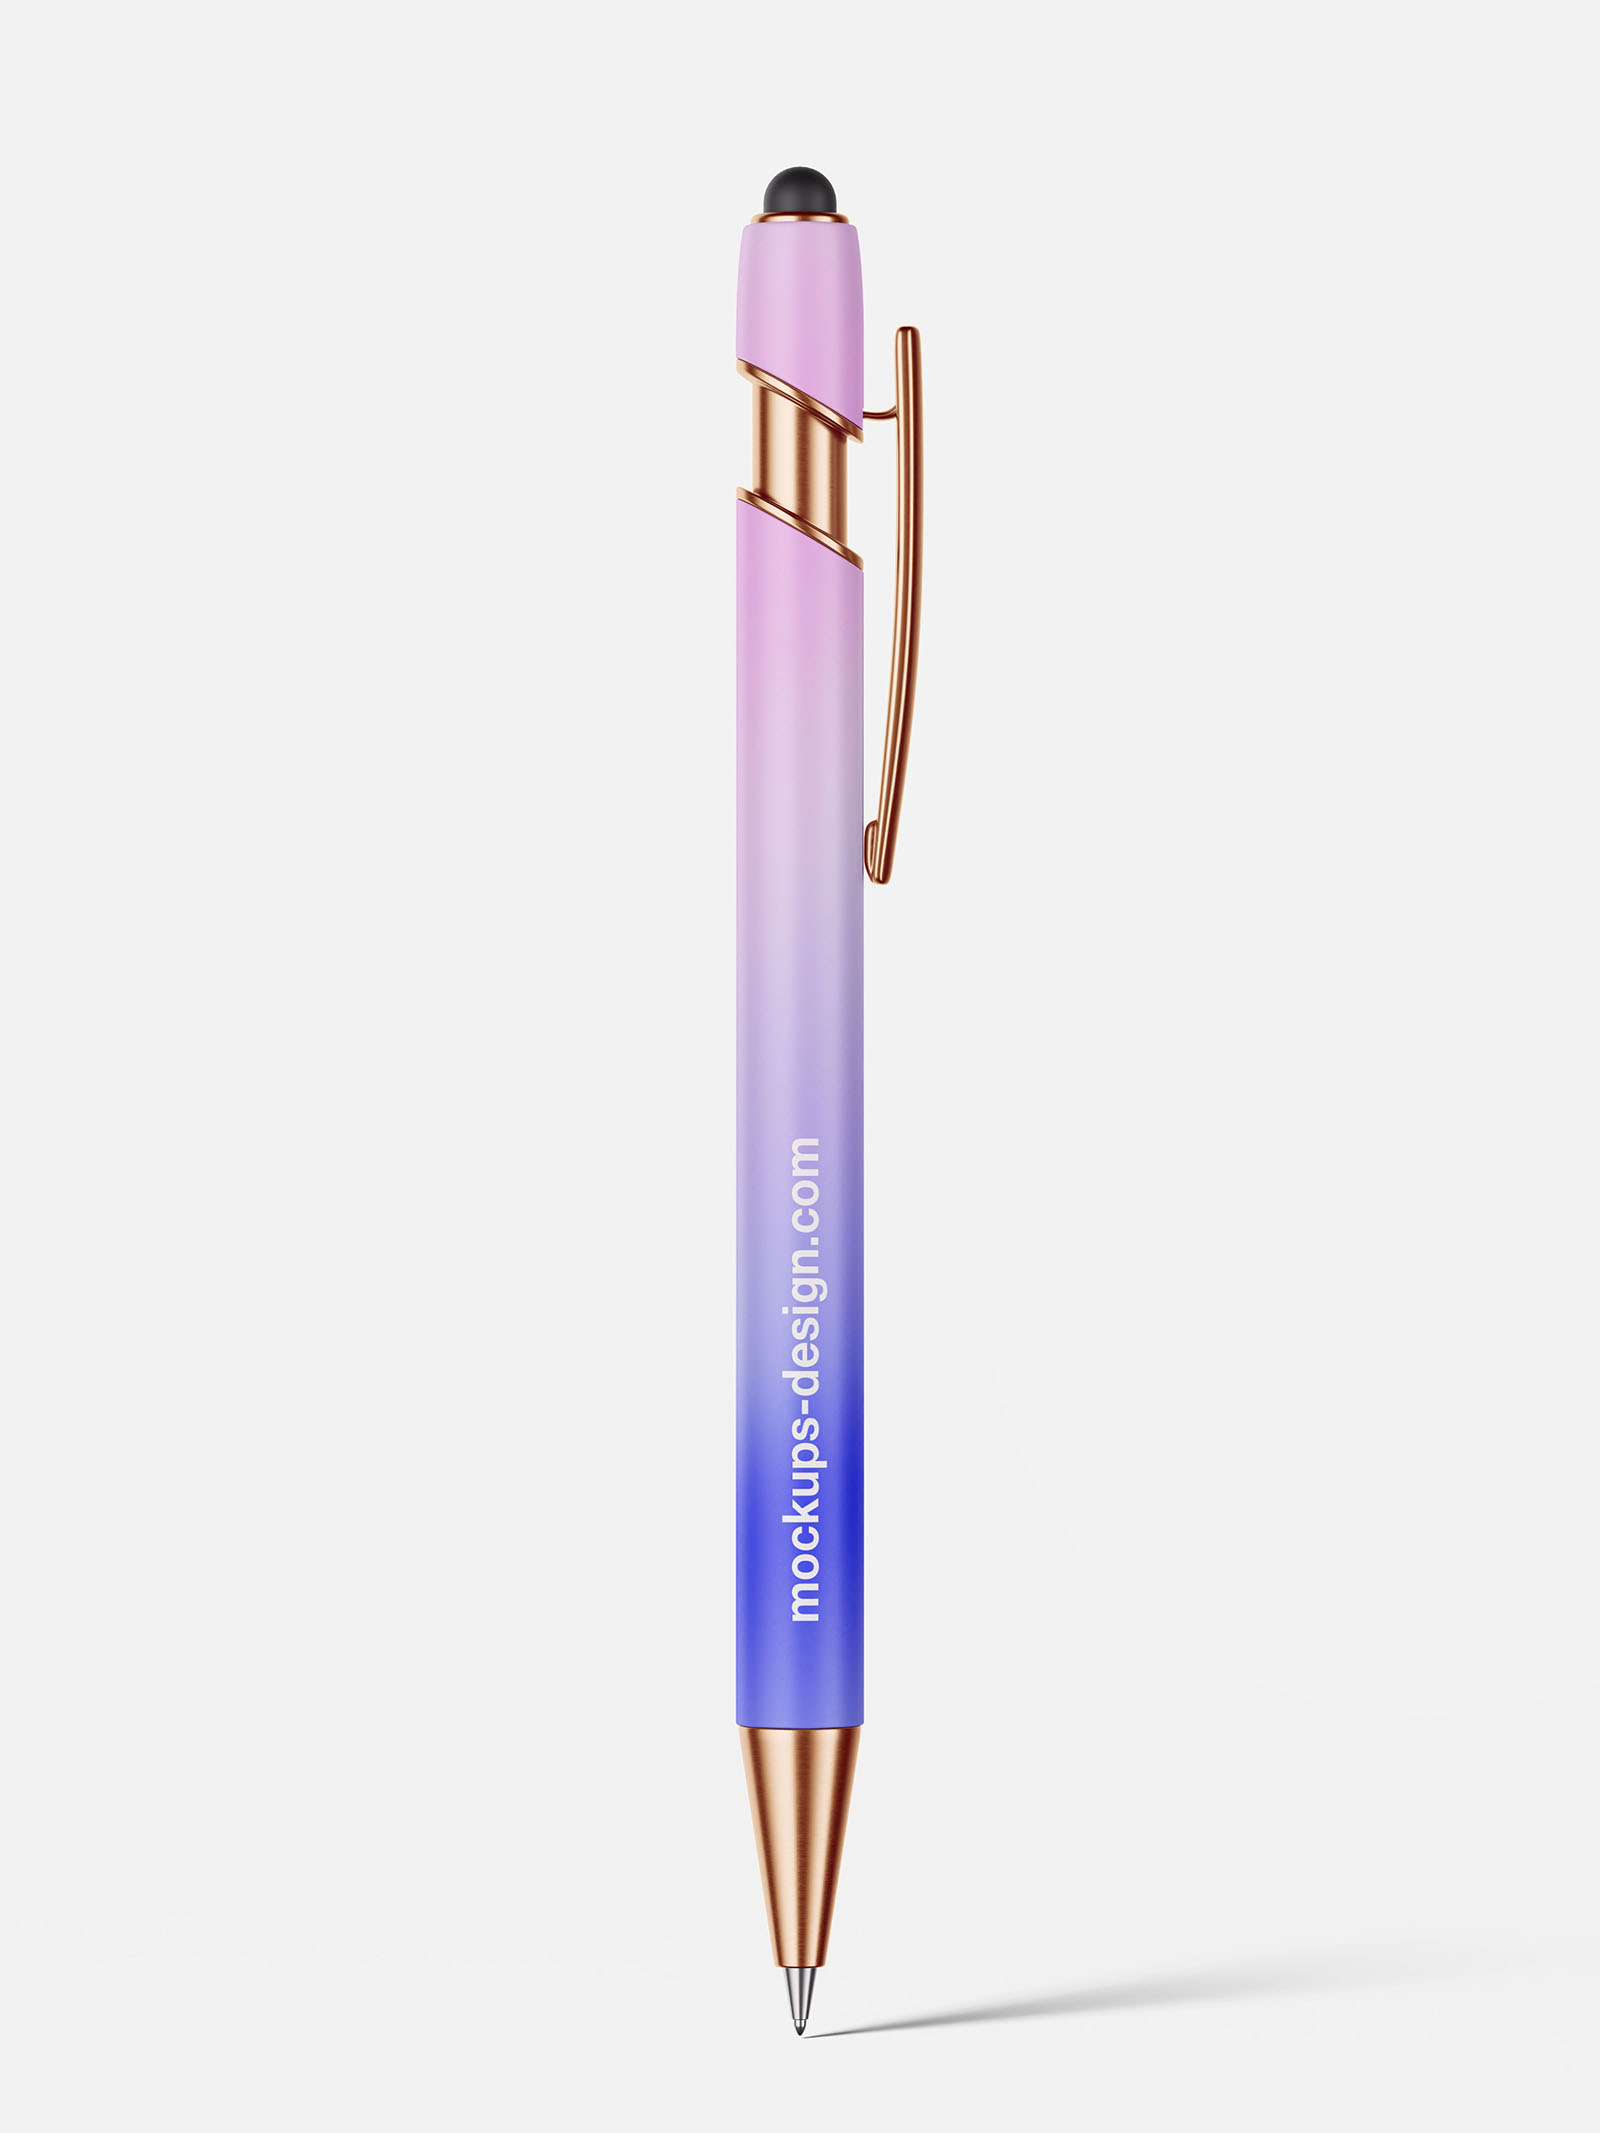 Ballpoint pen with stylus mockup